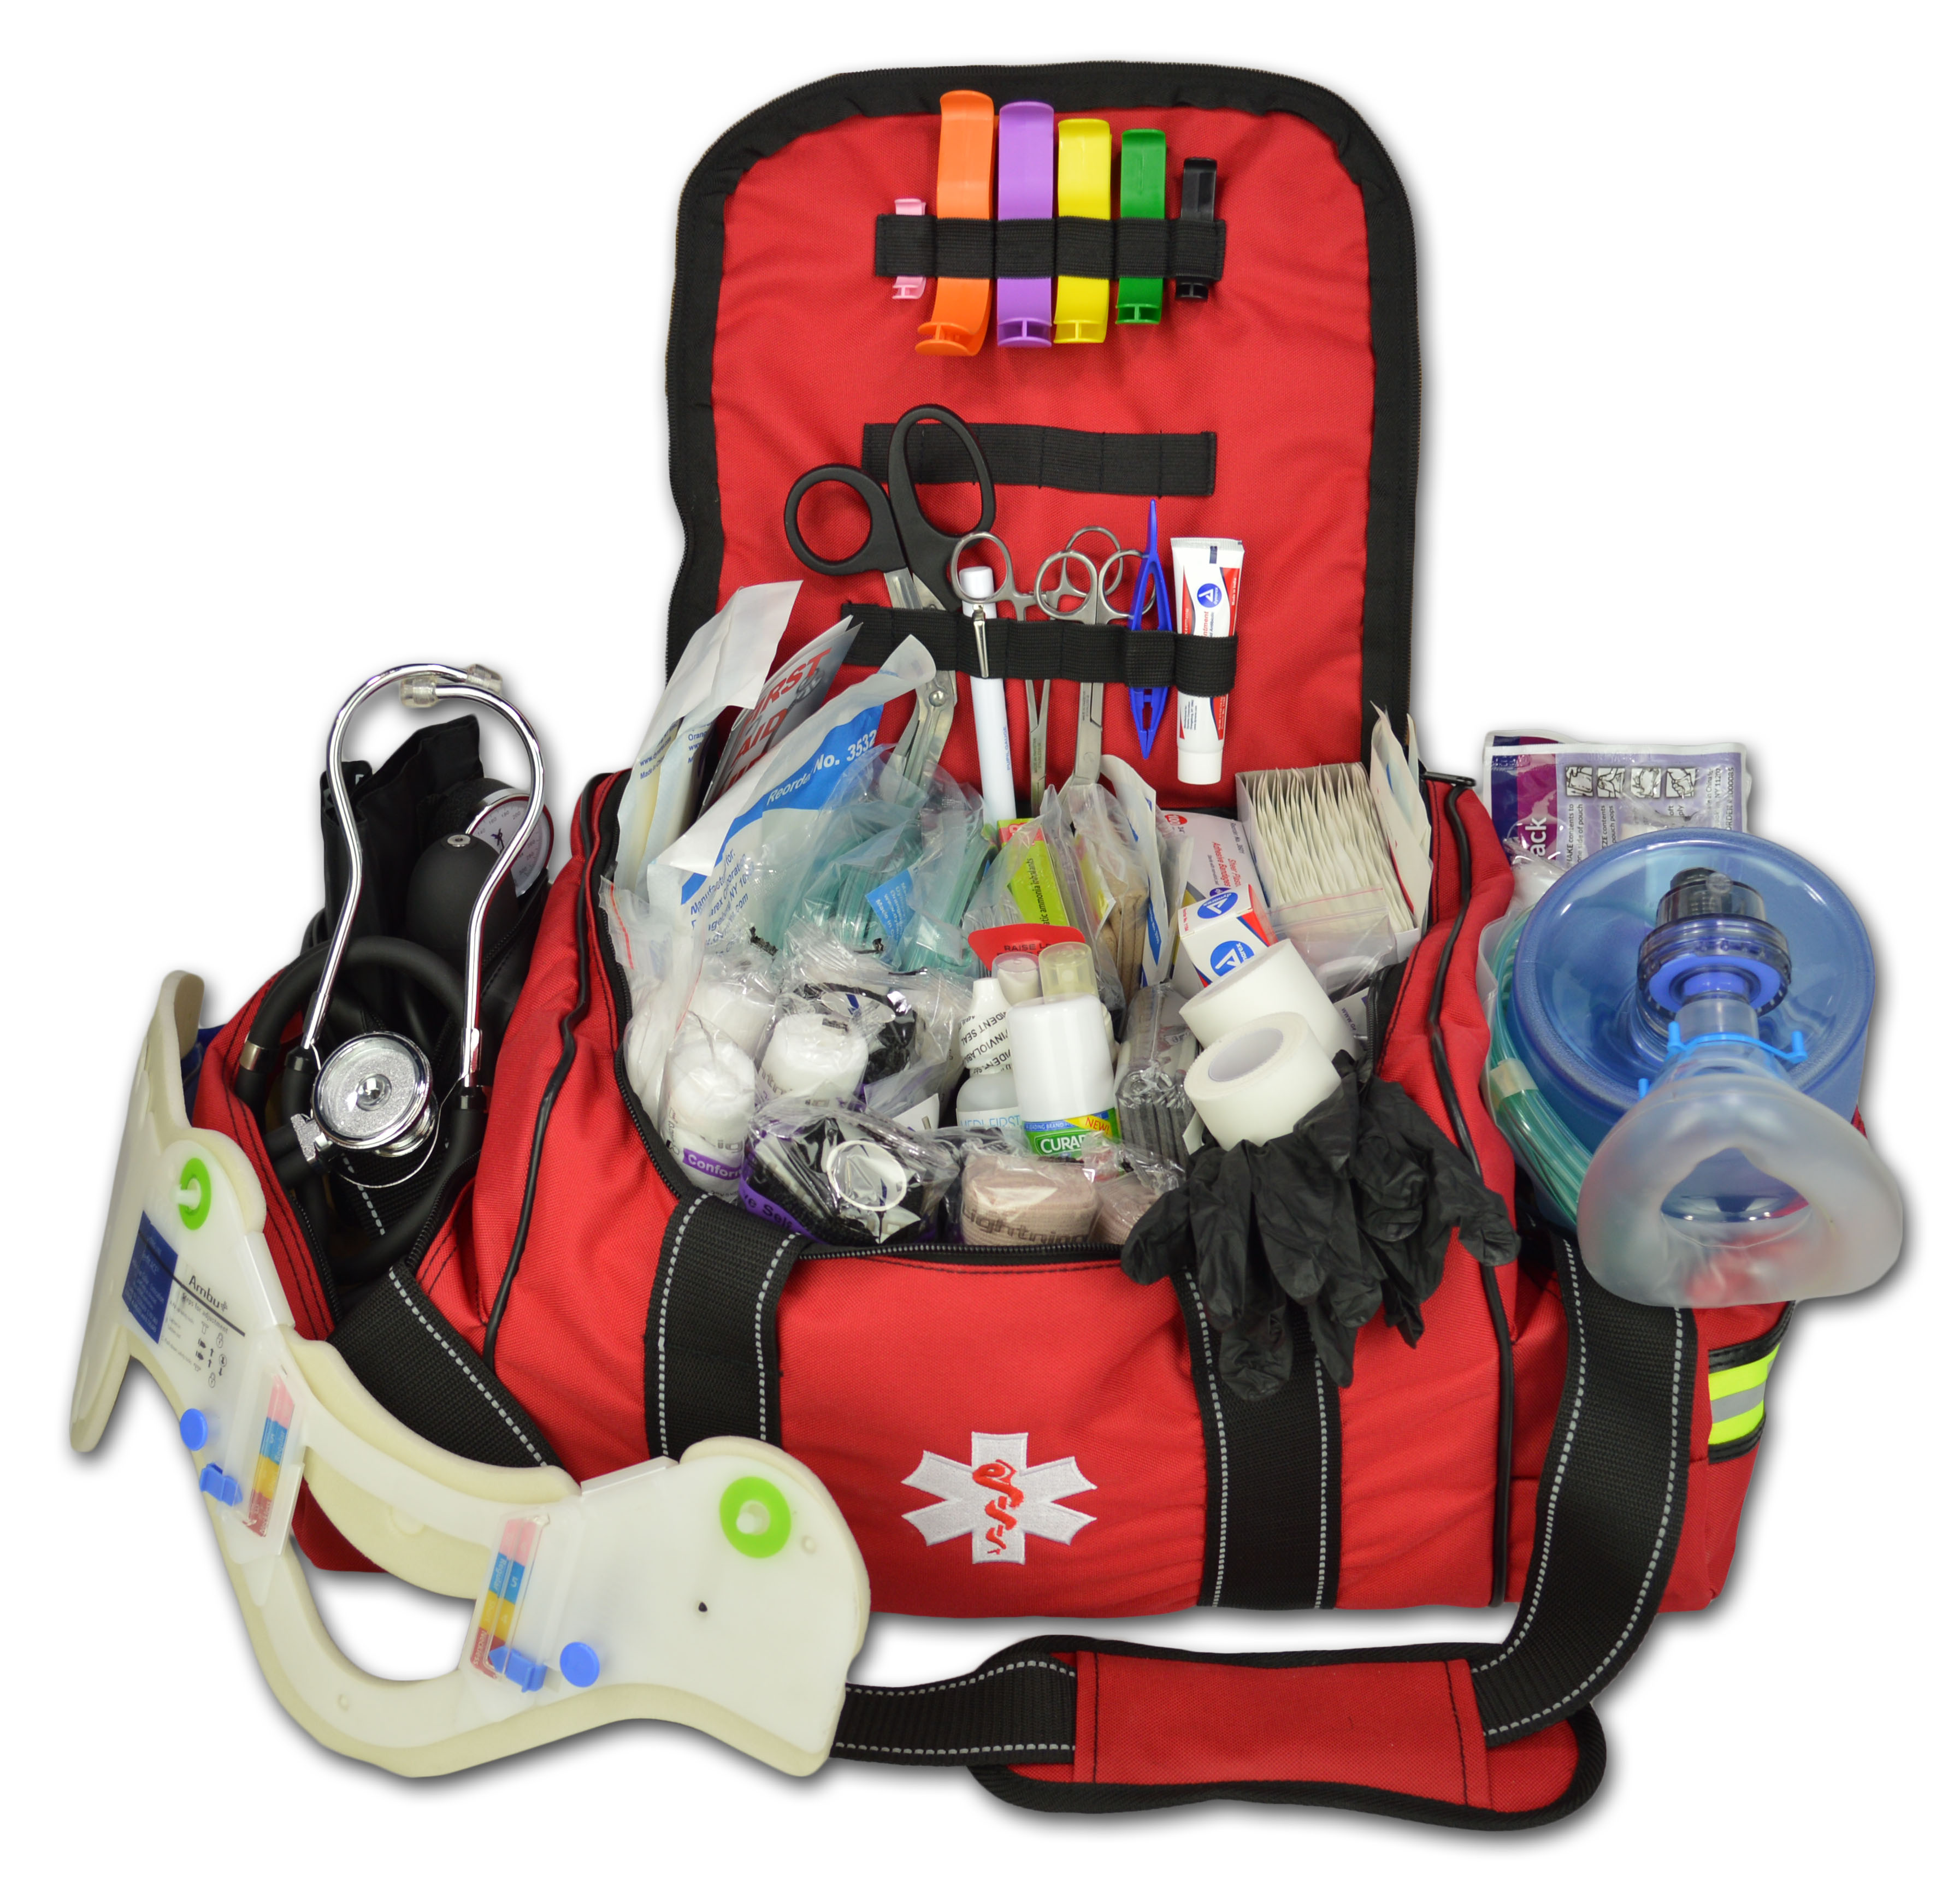 Lightning X Value Compact Medic First Responder EMS/EMT Stocked Trauma Bag w/Sta